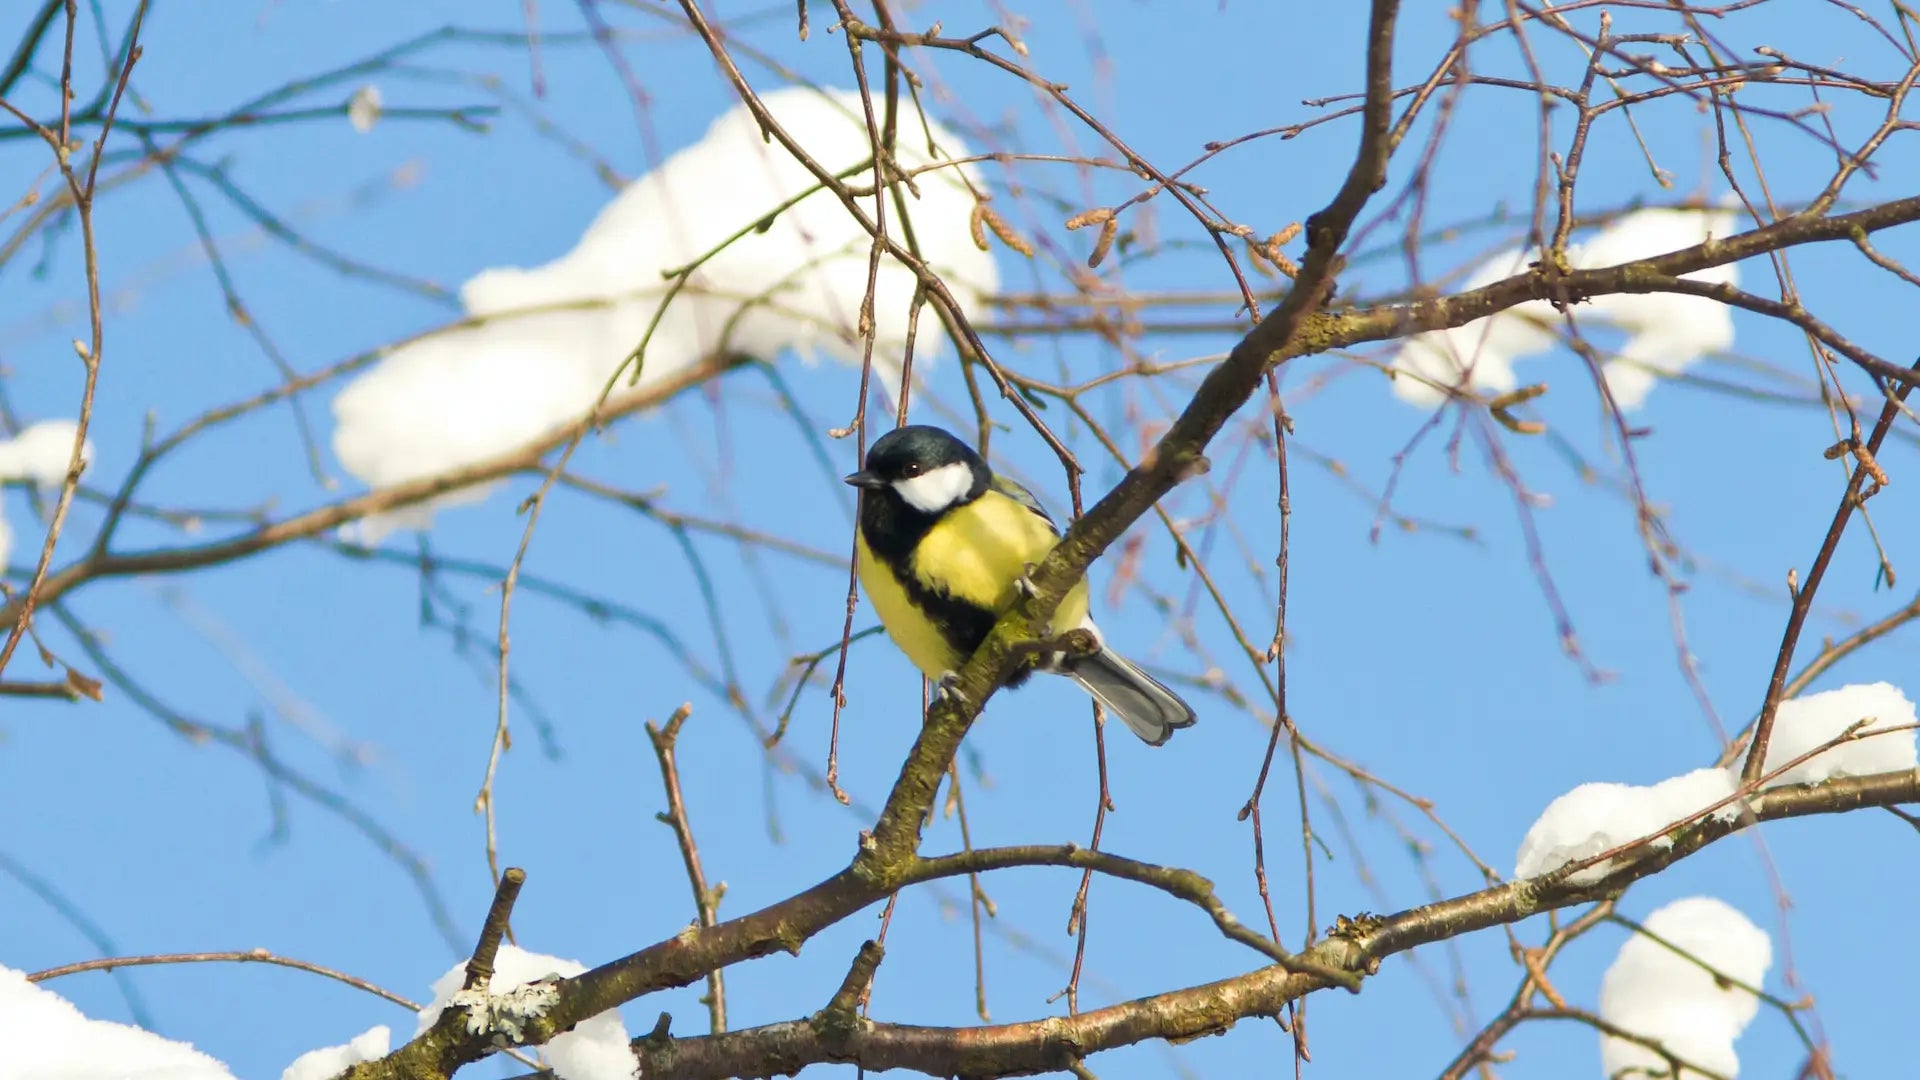 Do birds utilize solar power in winter?